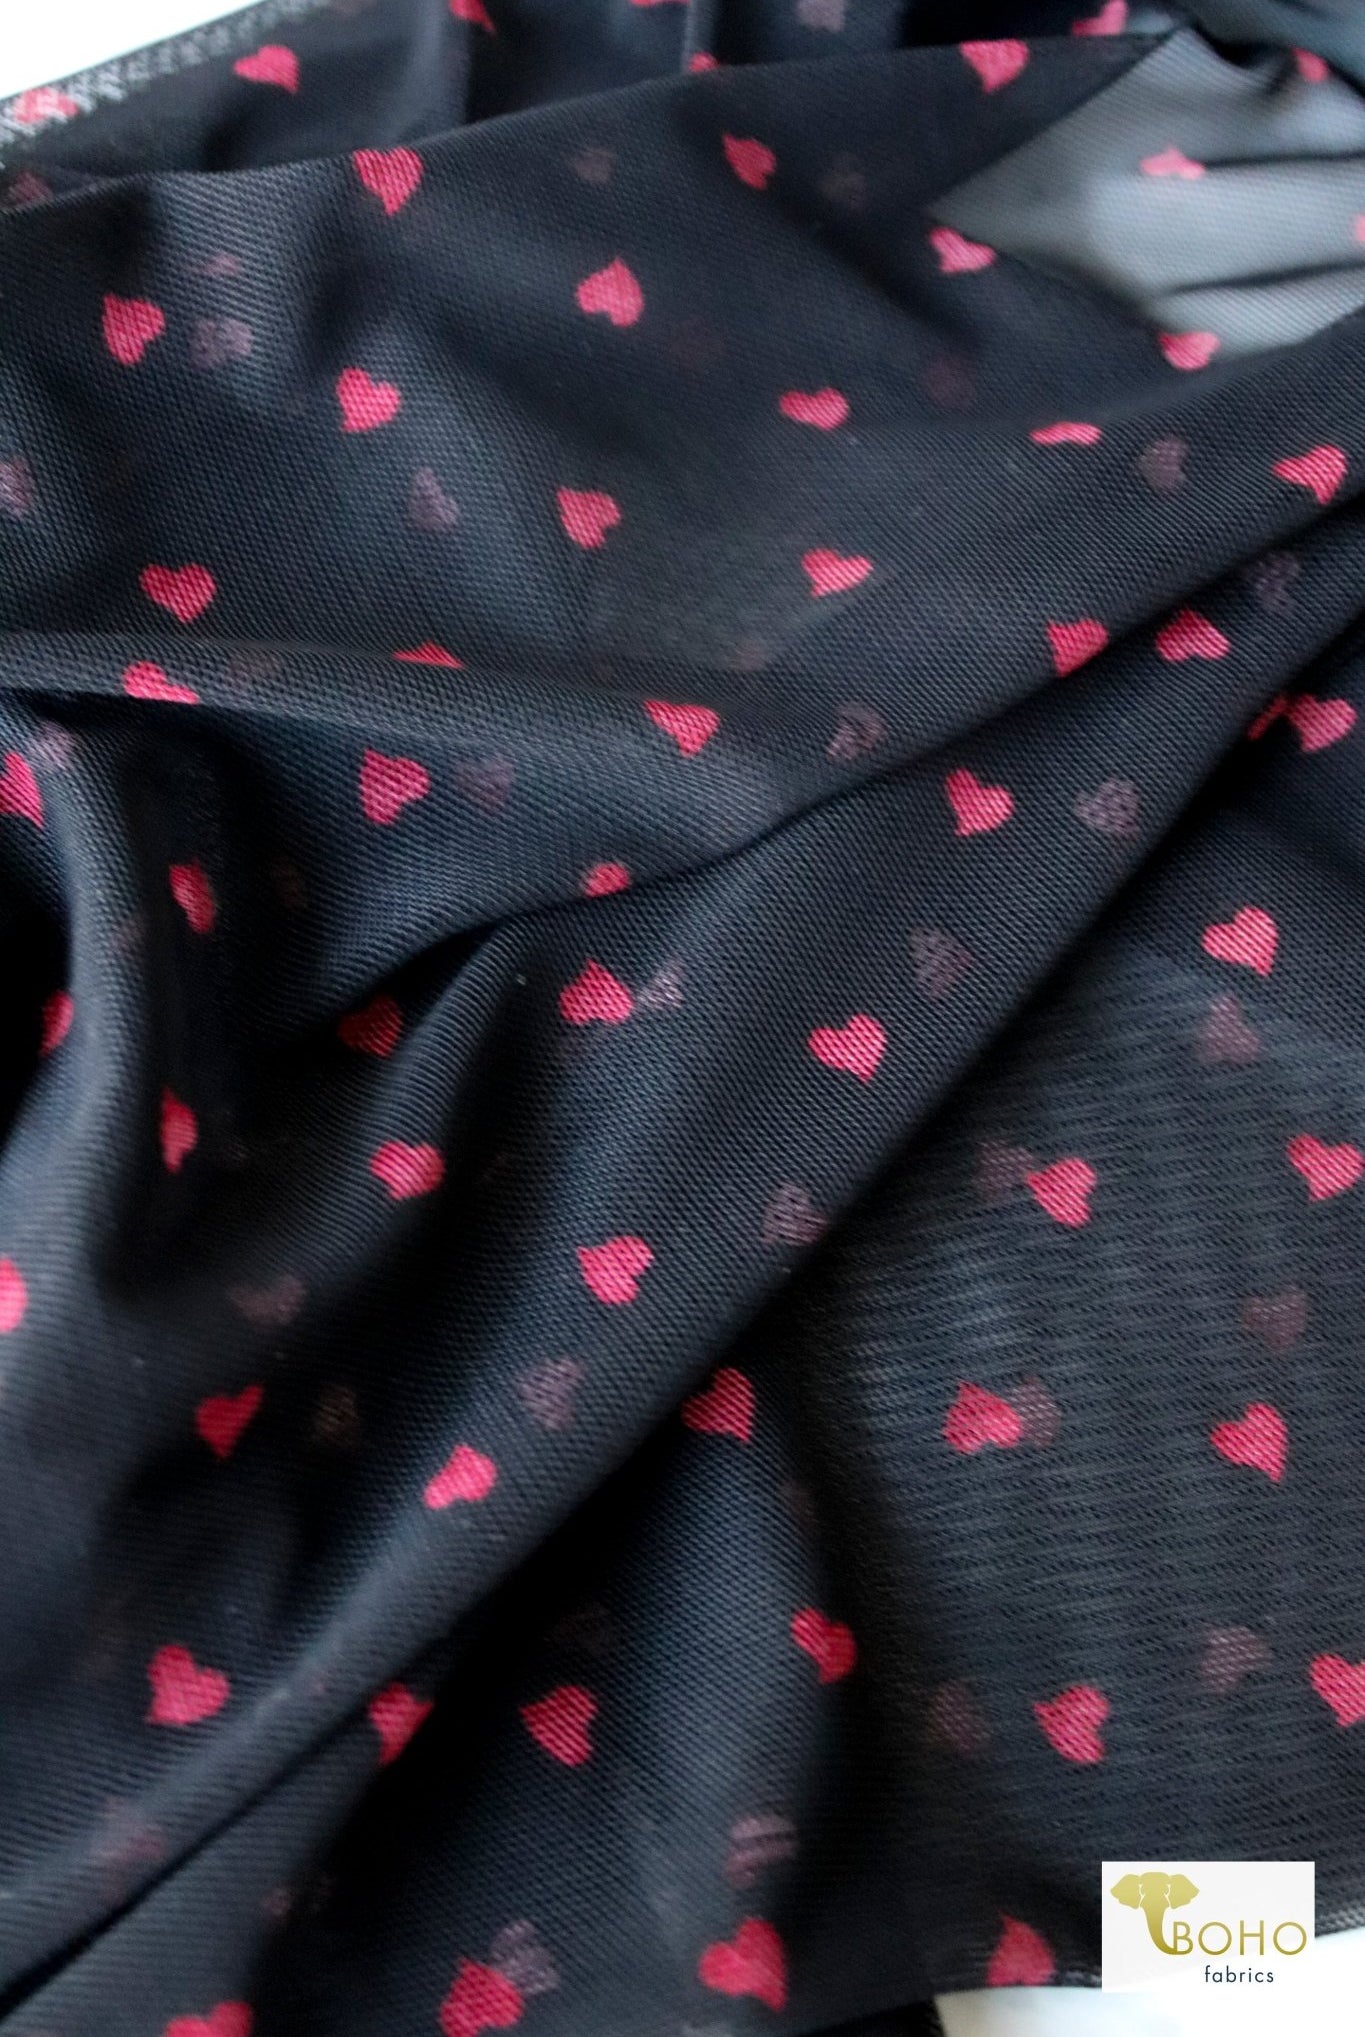 Red Hearts, Stretch Mesh Printed Fabric. - Boho Fabrics